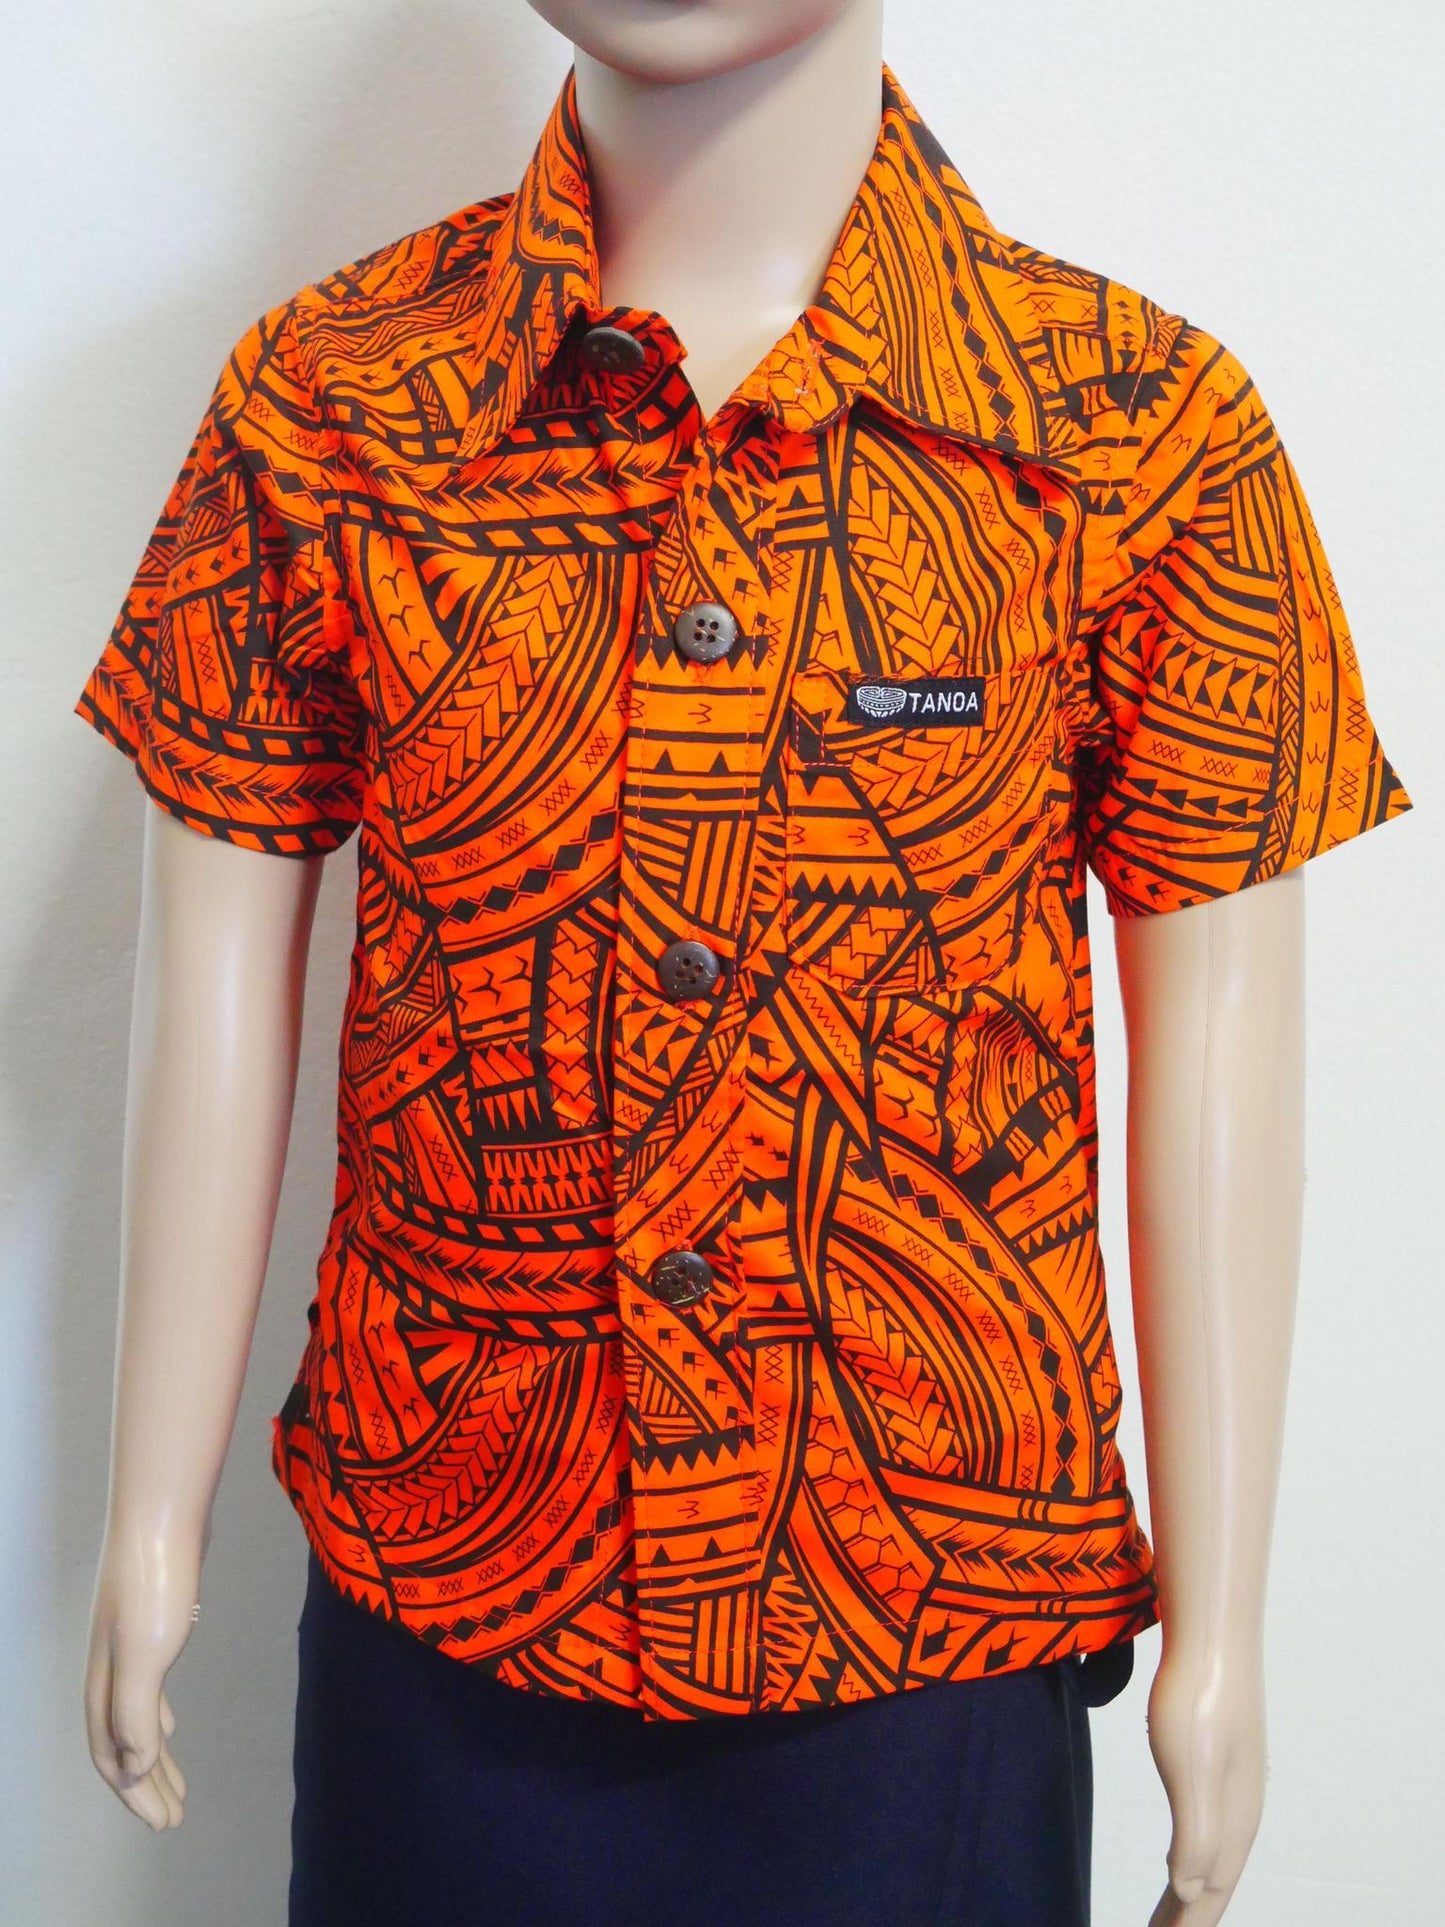 Tanoa Samoa Boy's Orange Shirt (Orange & Brown)